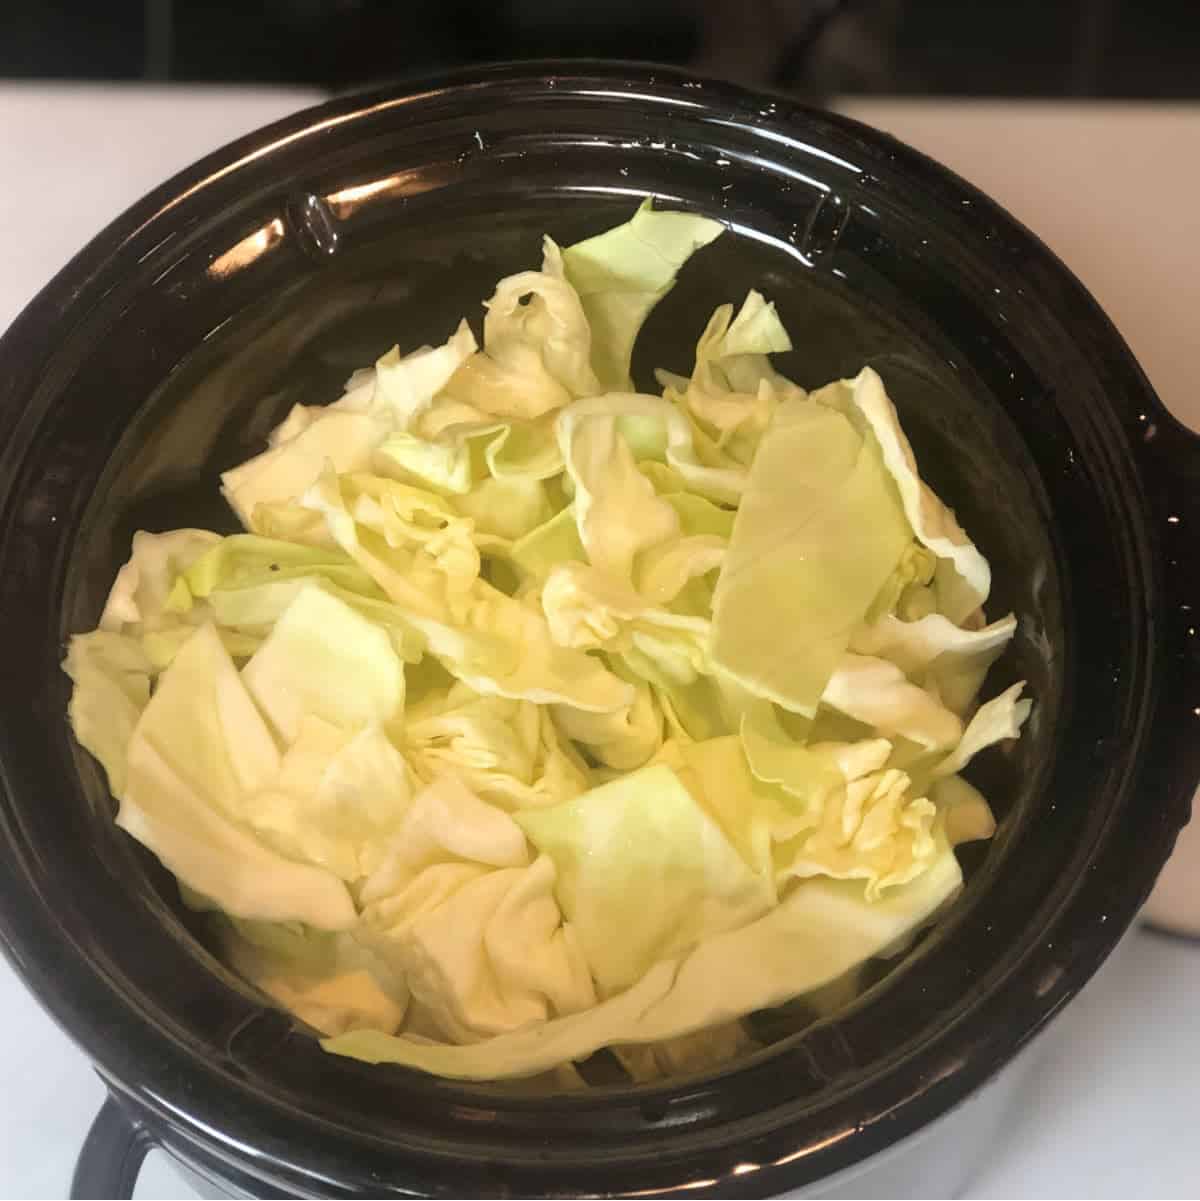 sliced cabbage in crockpot.